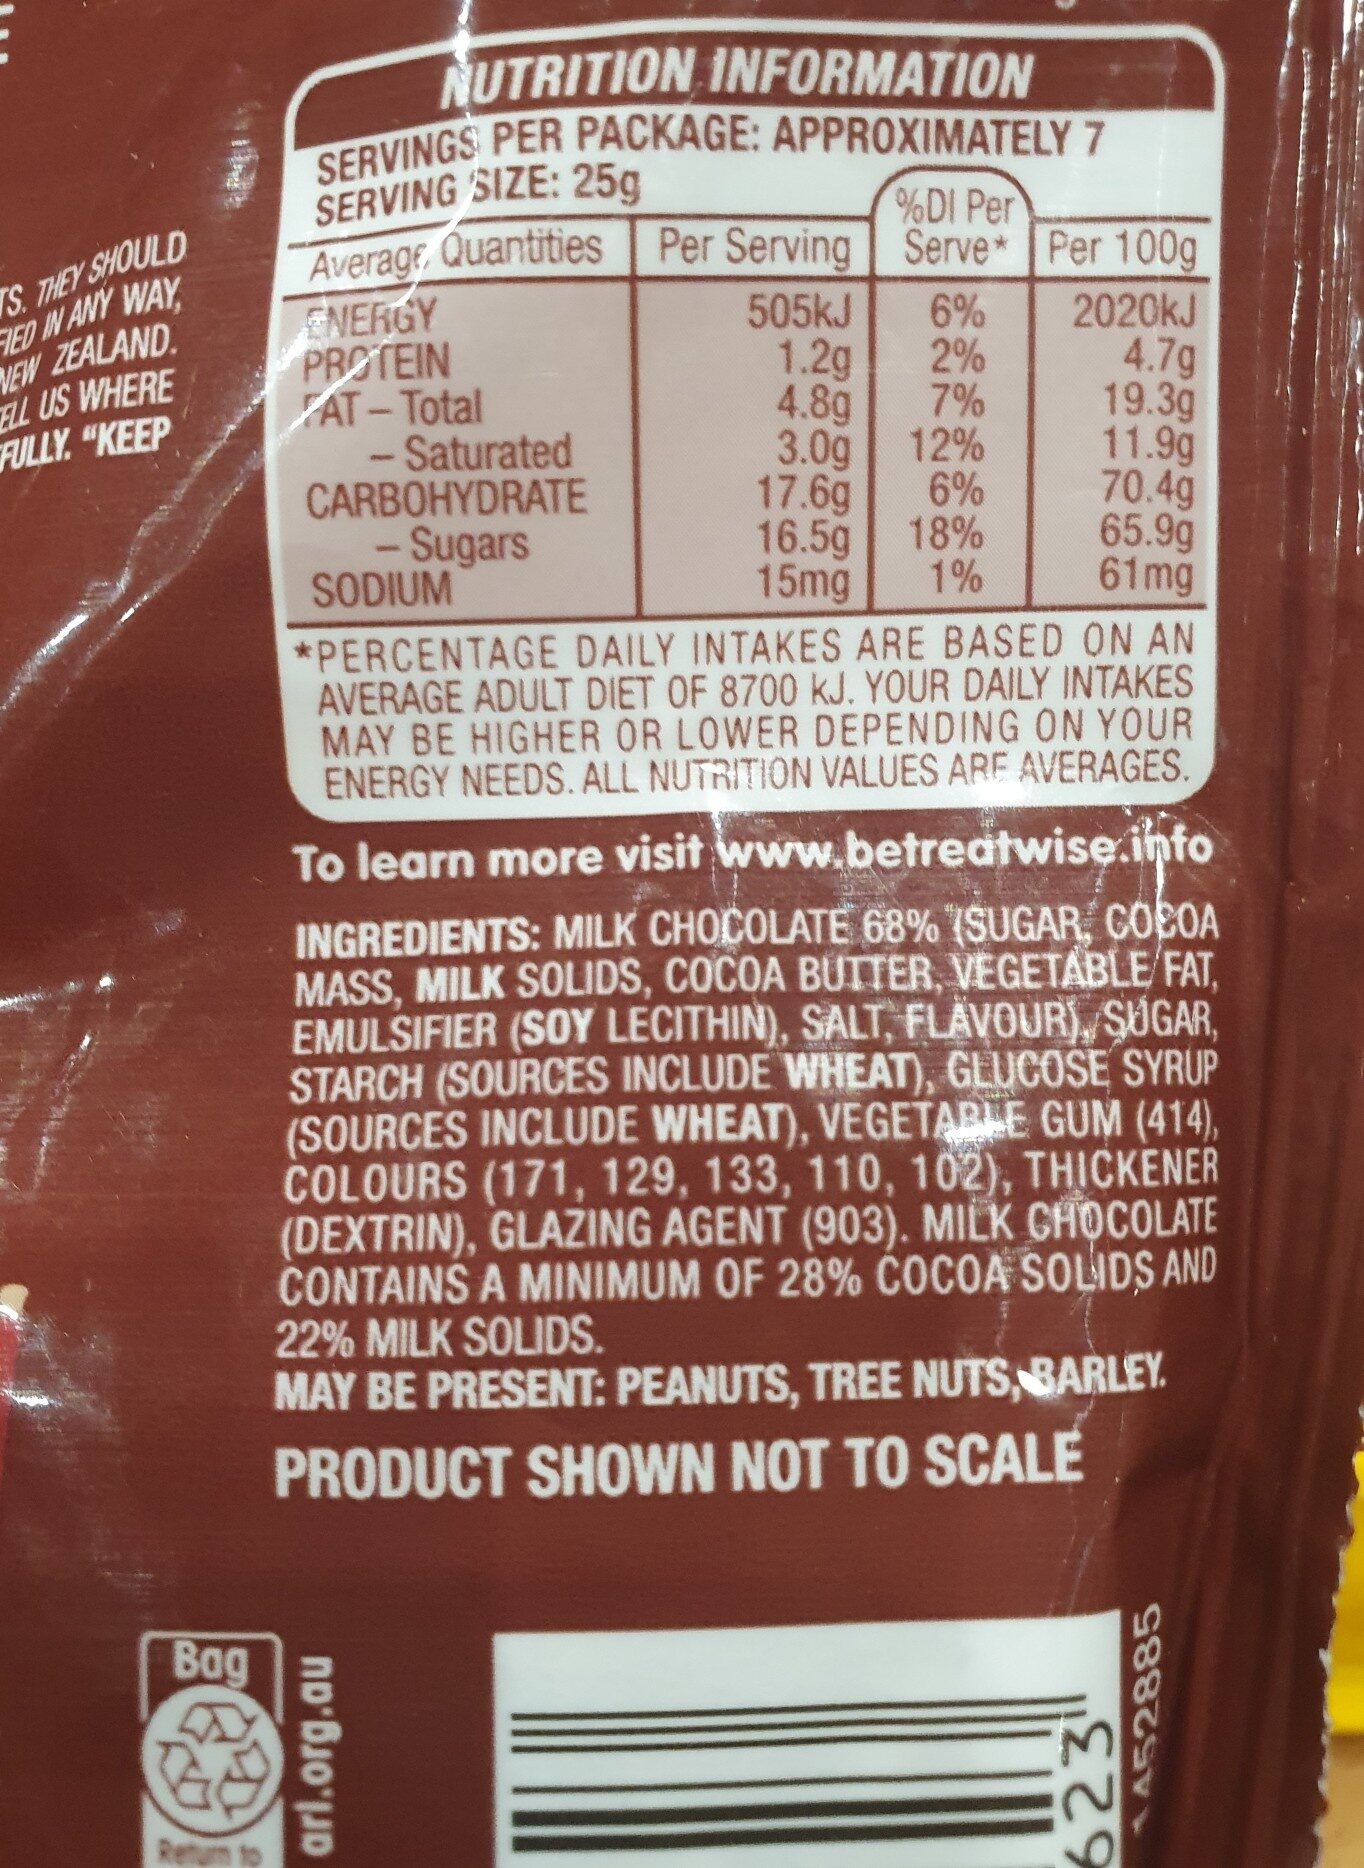 Chocolate m&m’s - Ingredients